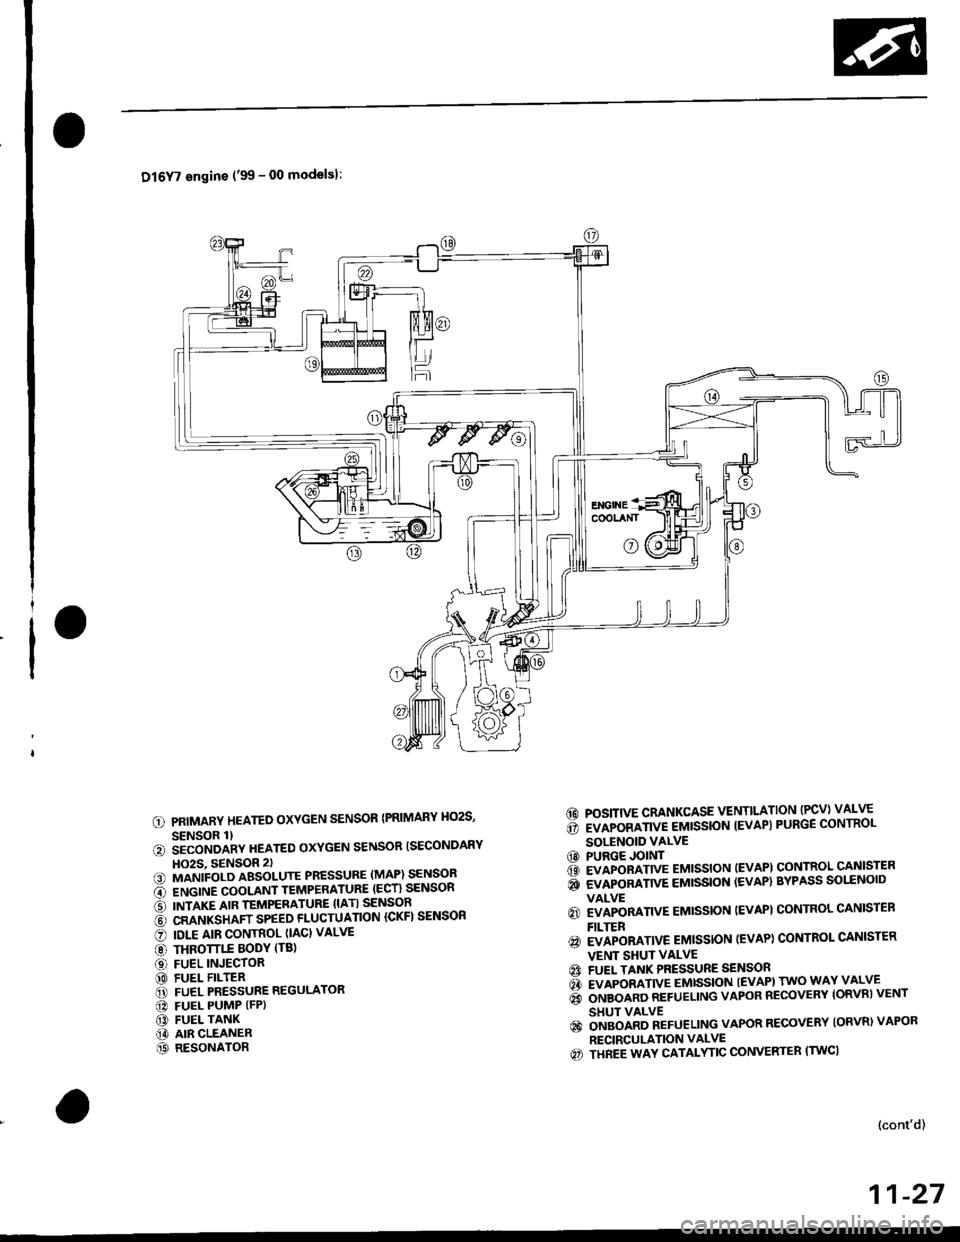 HONDA CIVIC 1996 6.G Owners Guide Dl6Y7 engins (99 - 00 modelsl:
PRIMARY HEATED OXYGEN SENSOR {PRIMARY HO2S,
SENSOR 1)iiconoanv neareo oxYGEN sENsoR ISECoNDARY
HO2S, 9ENSOR 2)MANIFOLD ABSOLUTE PRESSURE (MAP) SENSOR
ENGINE COOLANT TEM